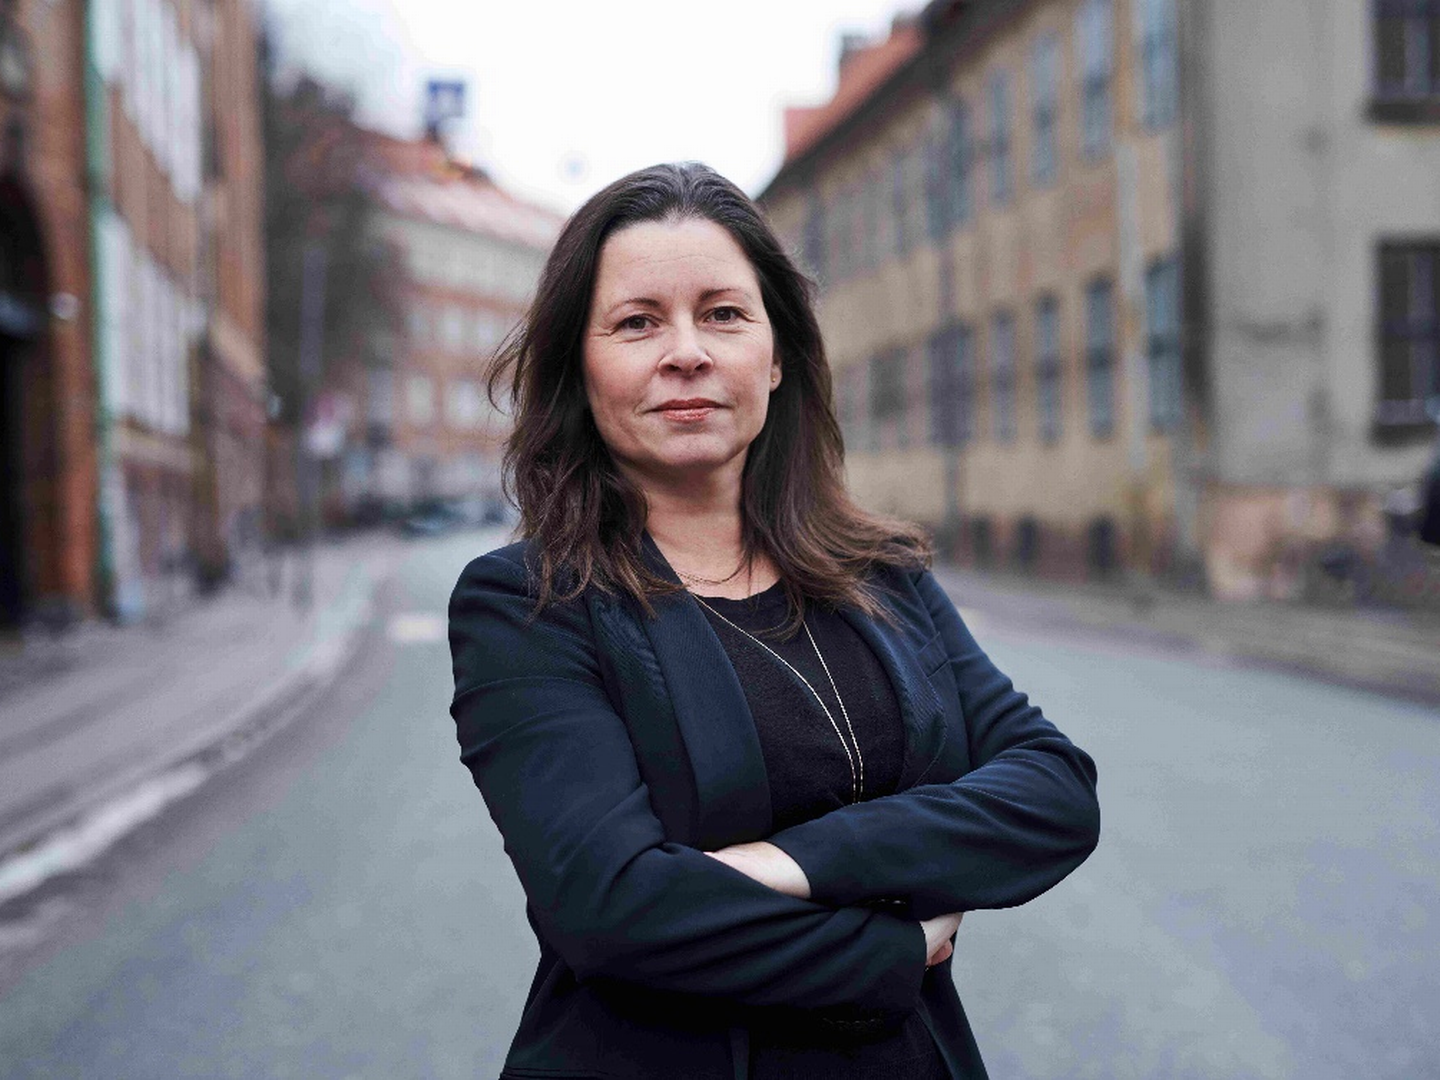 Camilla Høy er ny forlagschef for skønlitteratur i Politikens Forlag. | Foto: Karen Rosetzsky / Politikens Forlag